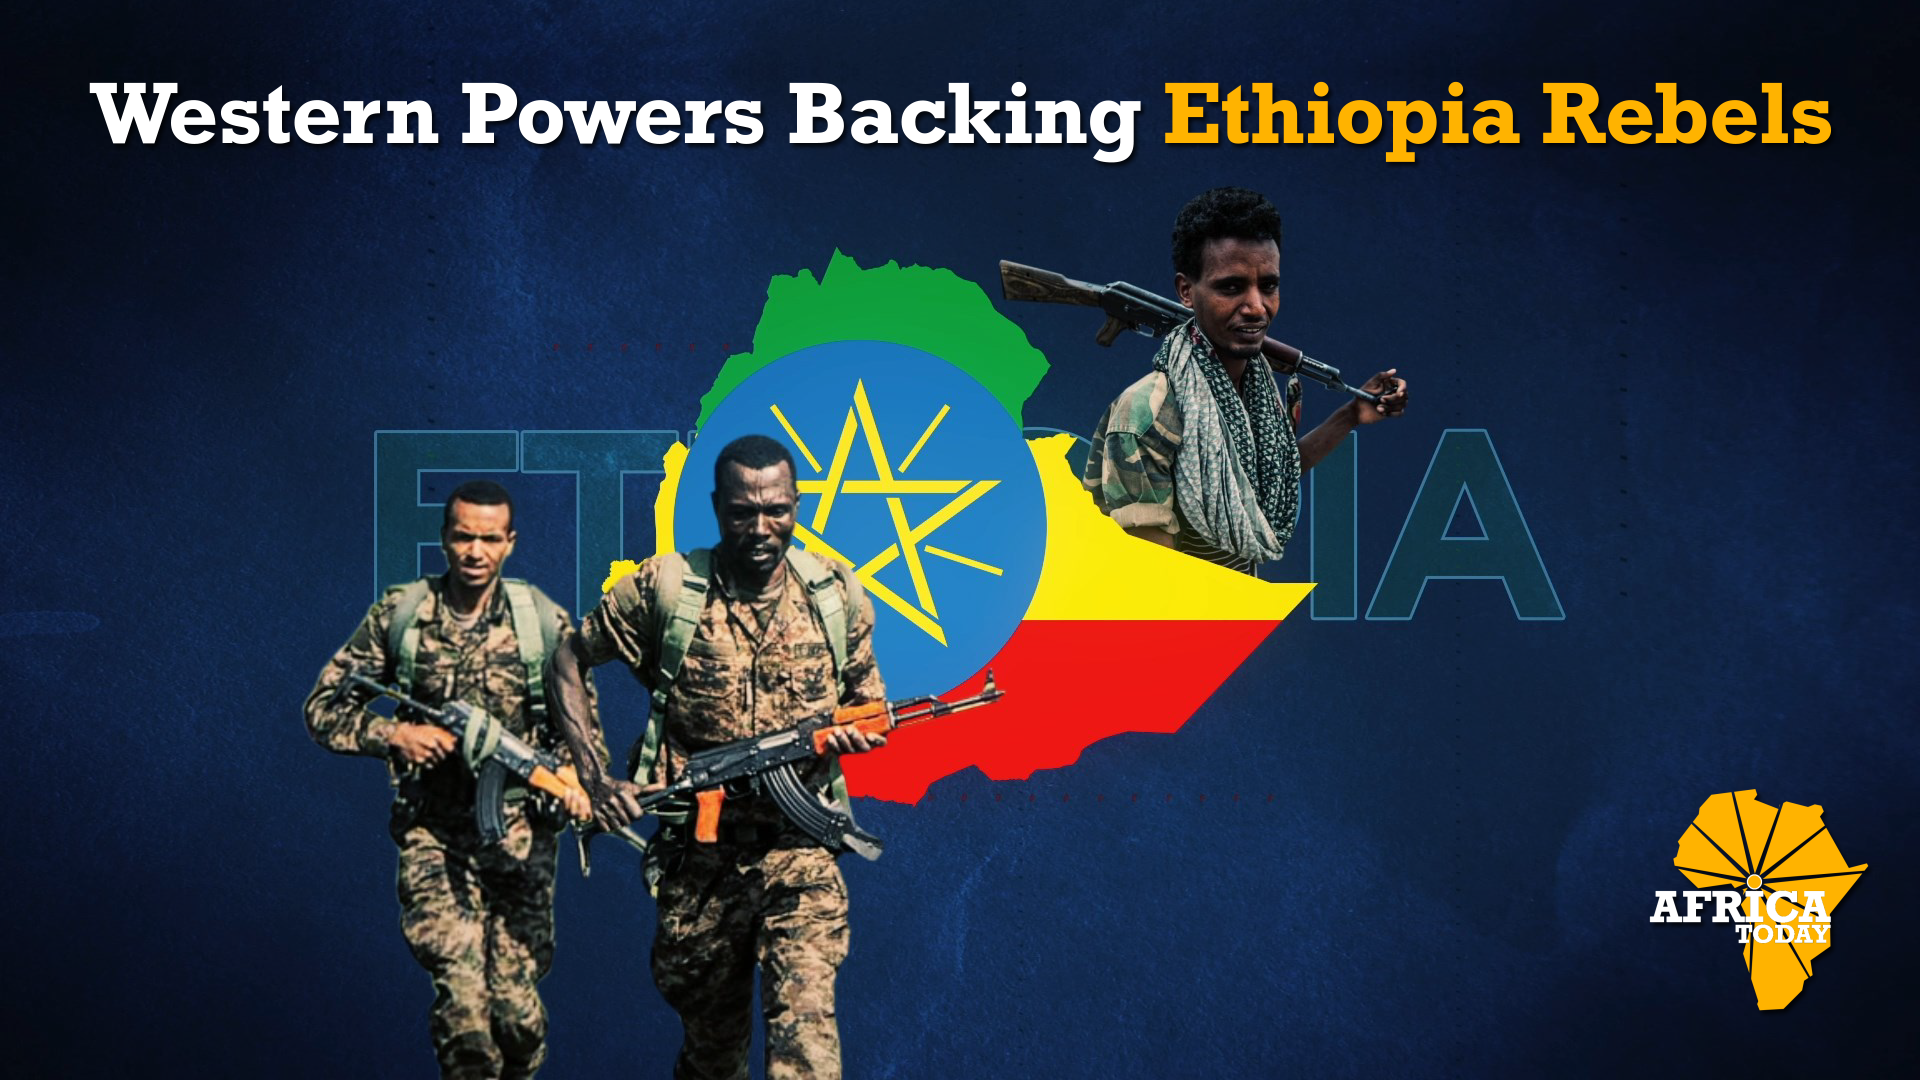 Western powers backing Ethiopia rebels